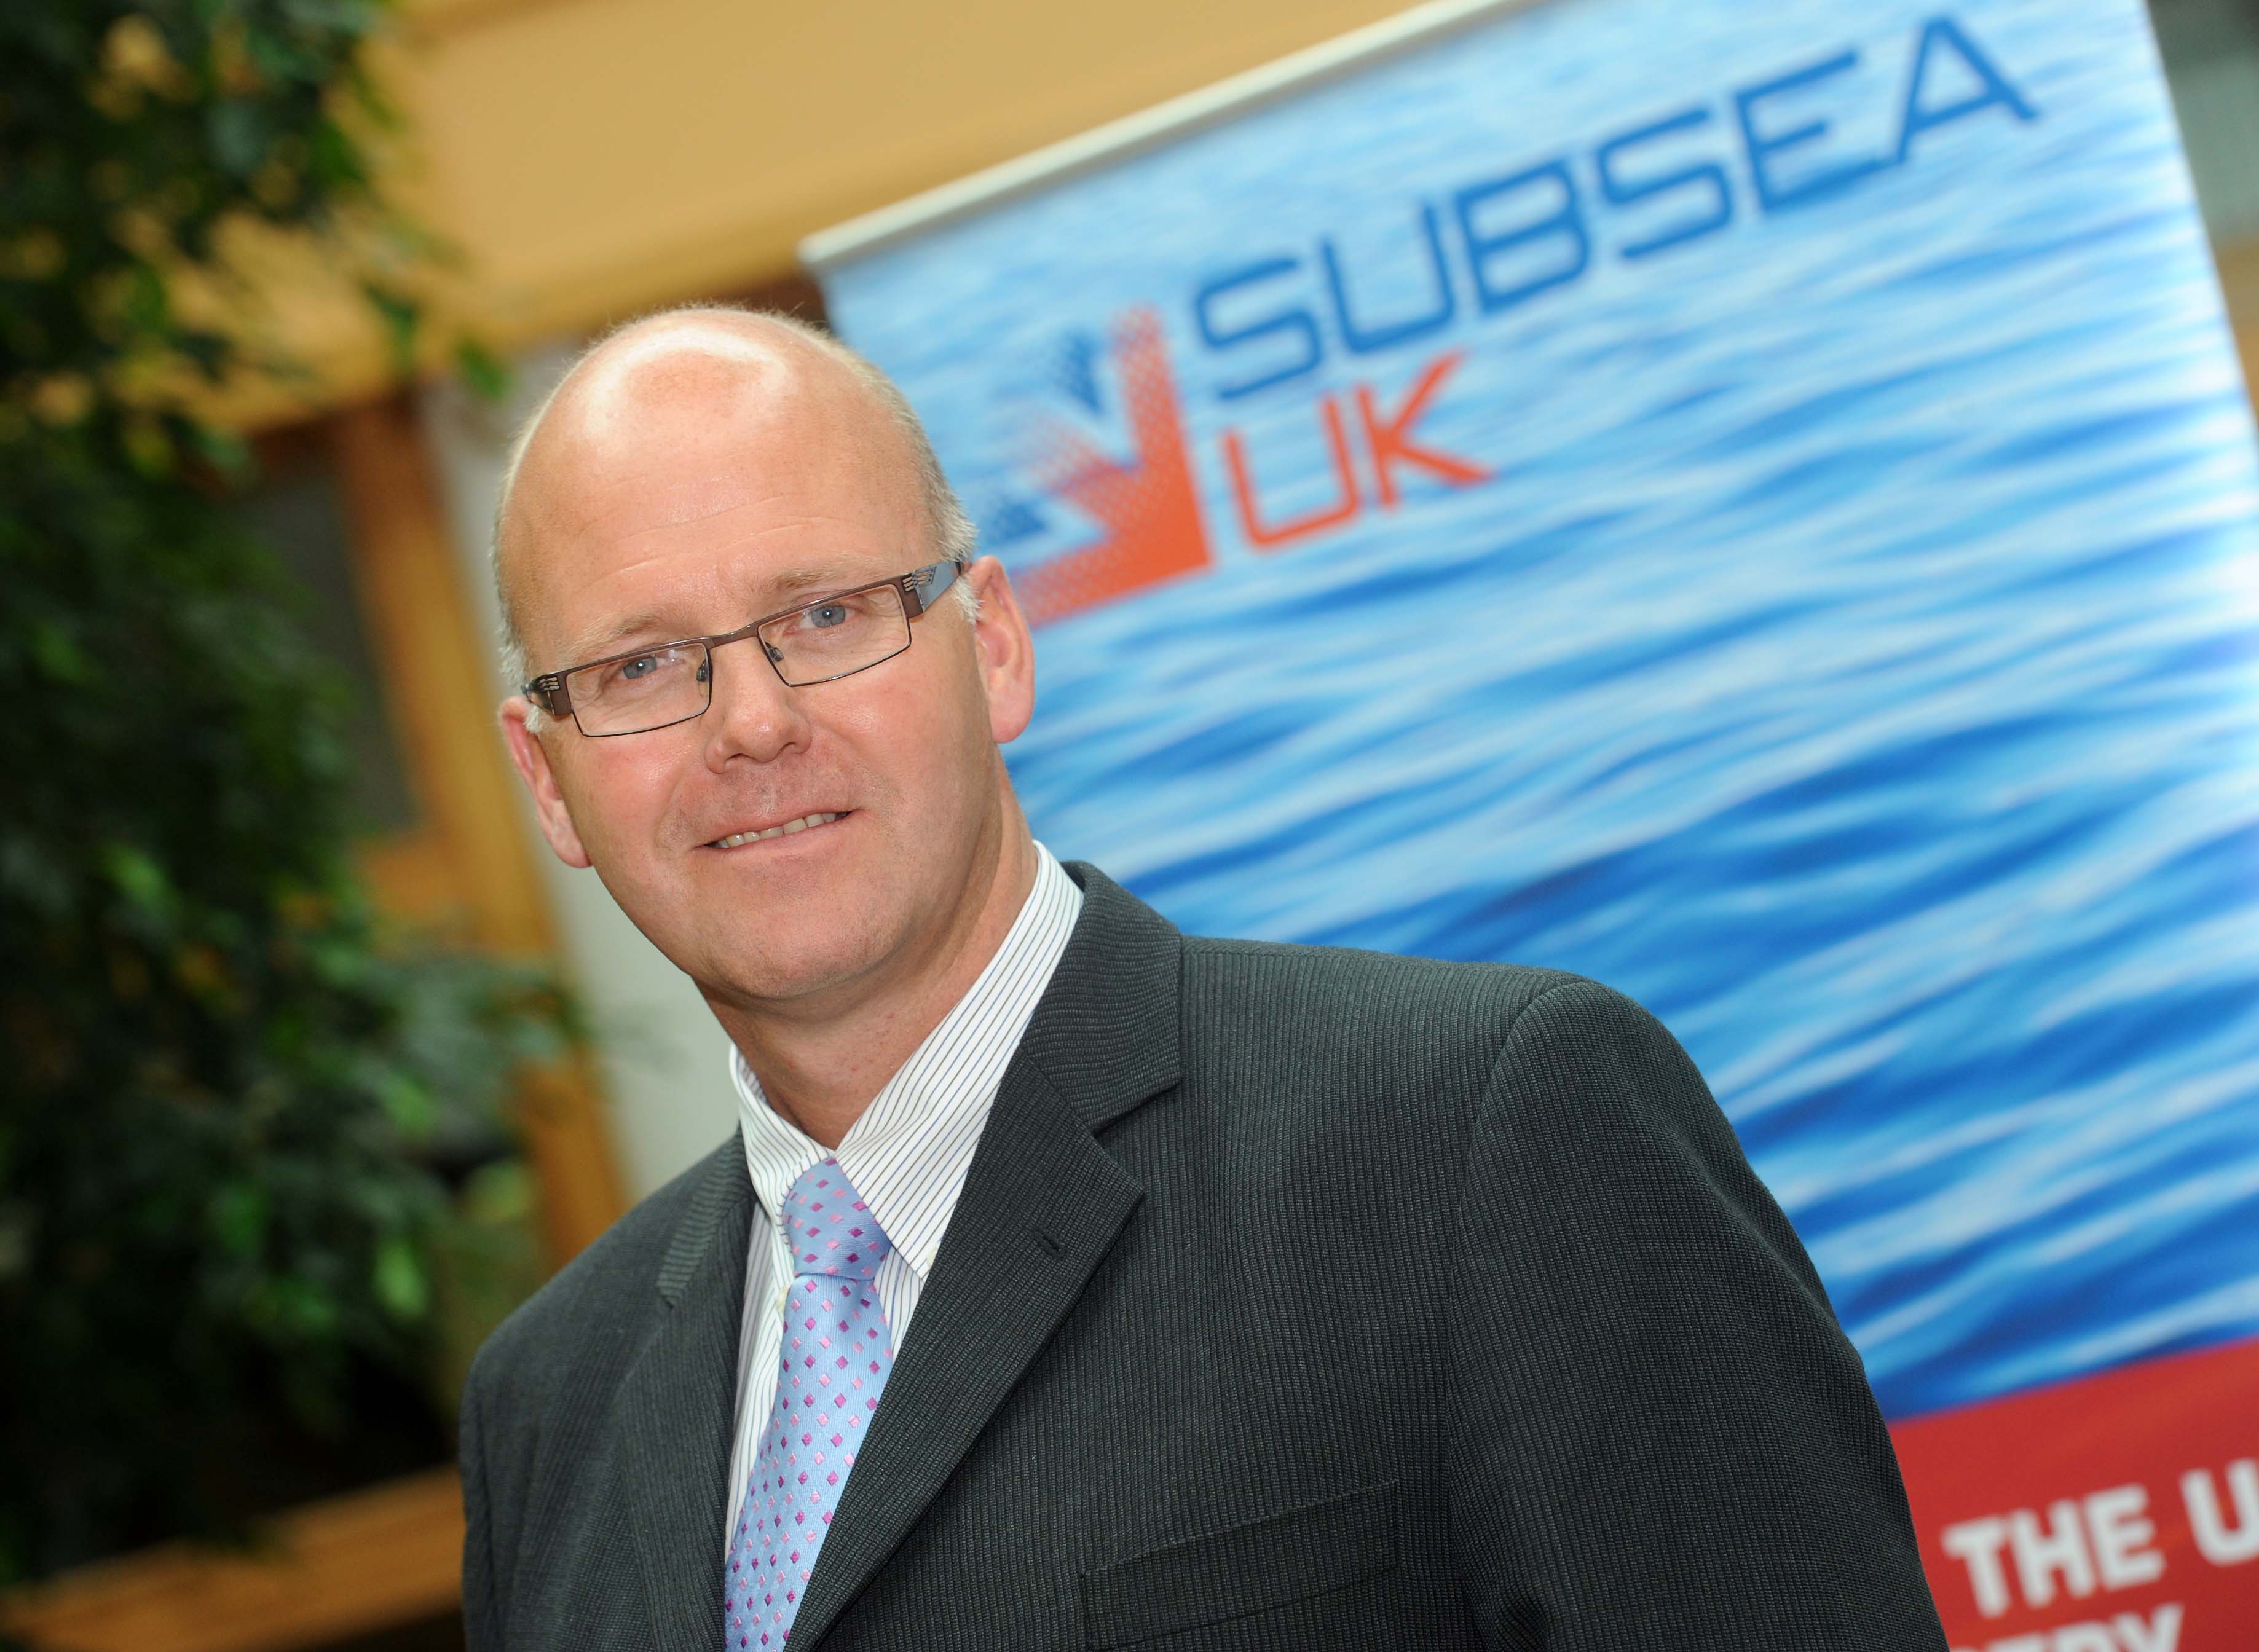 Subsea UK chief executive Neil Gordin